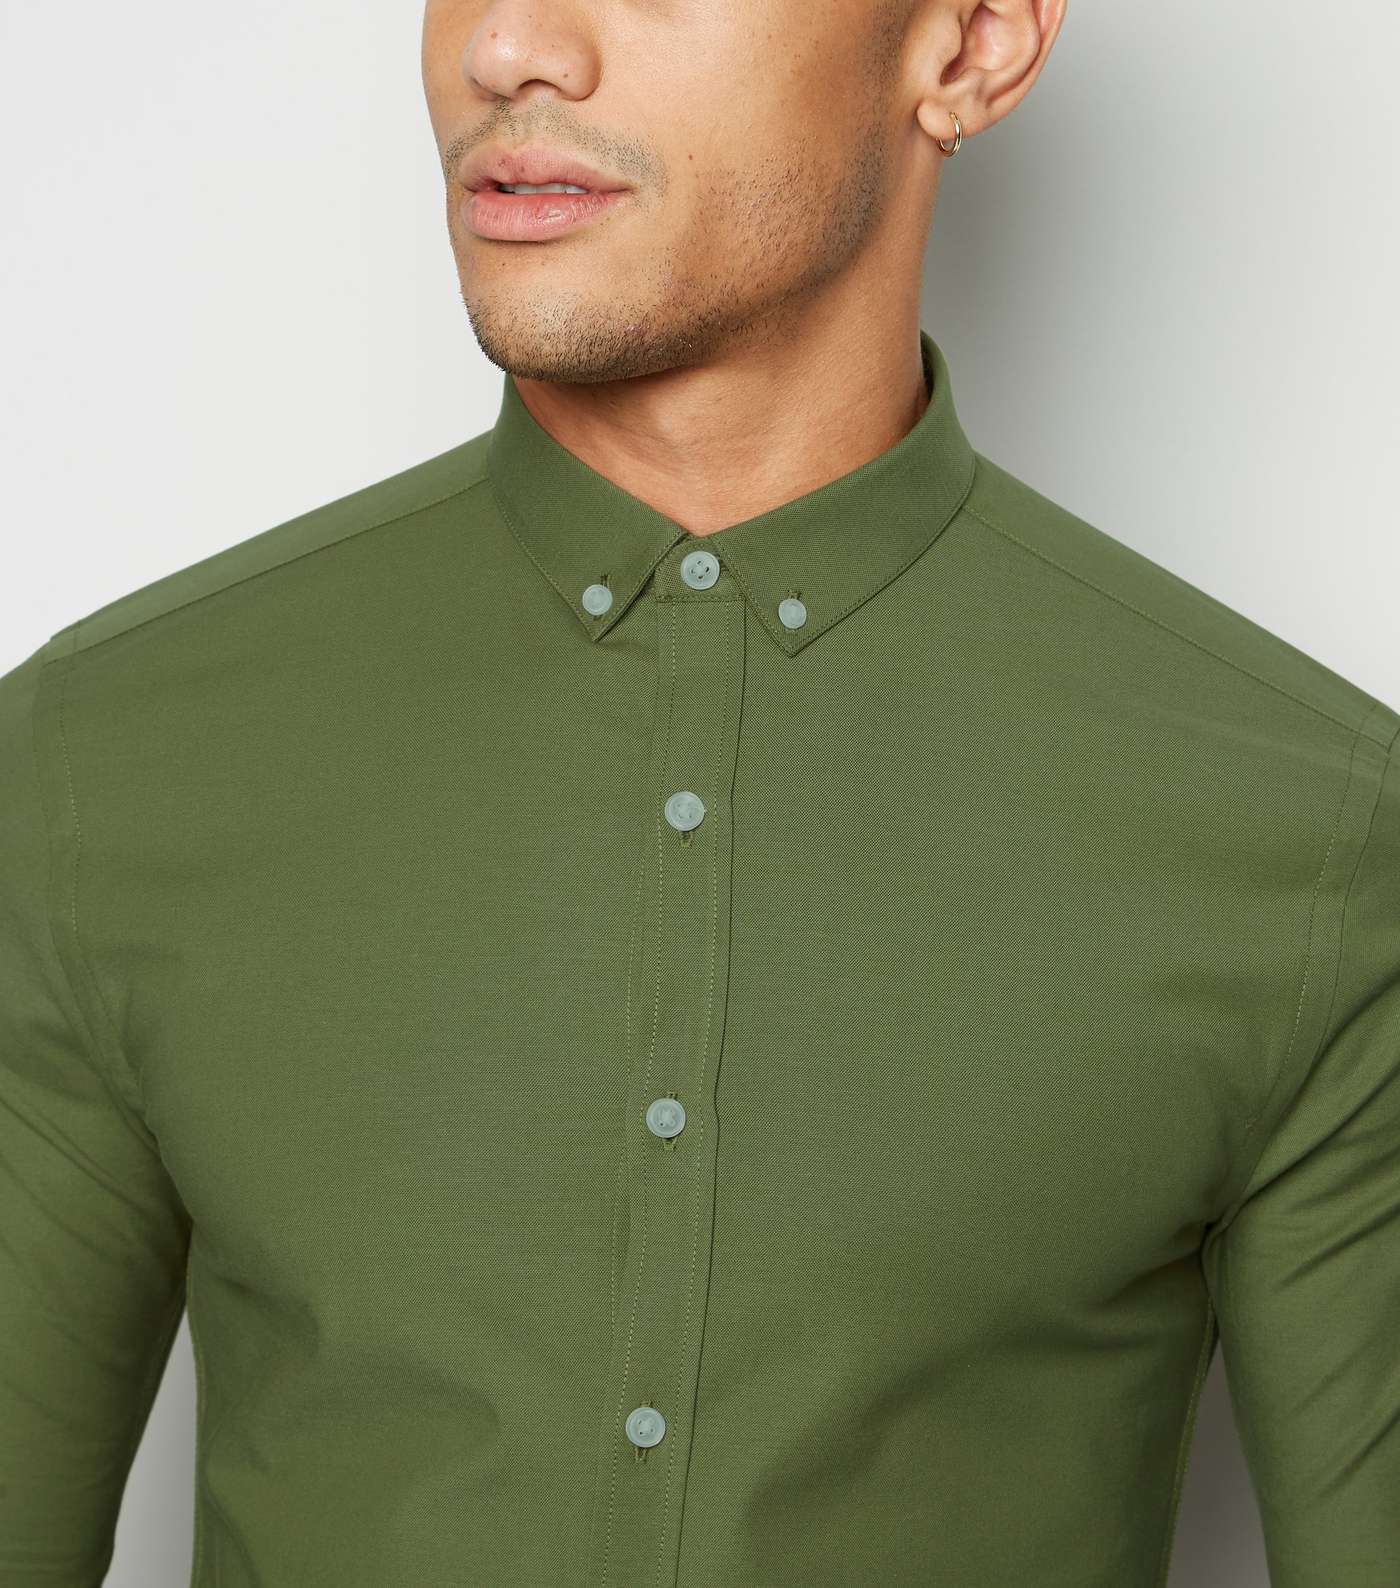 Khaki Muscle Fit Long Sleeve Oxford Shirt Image 5